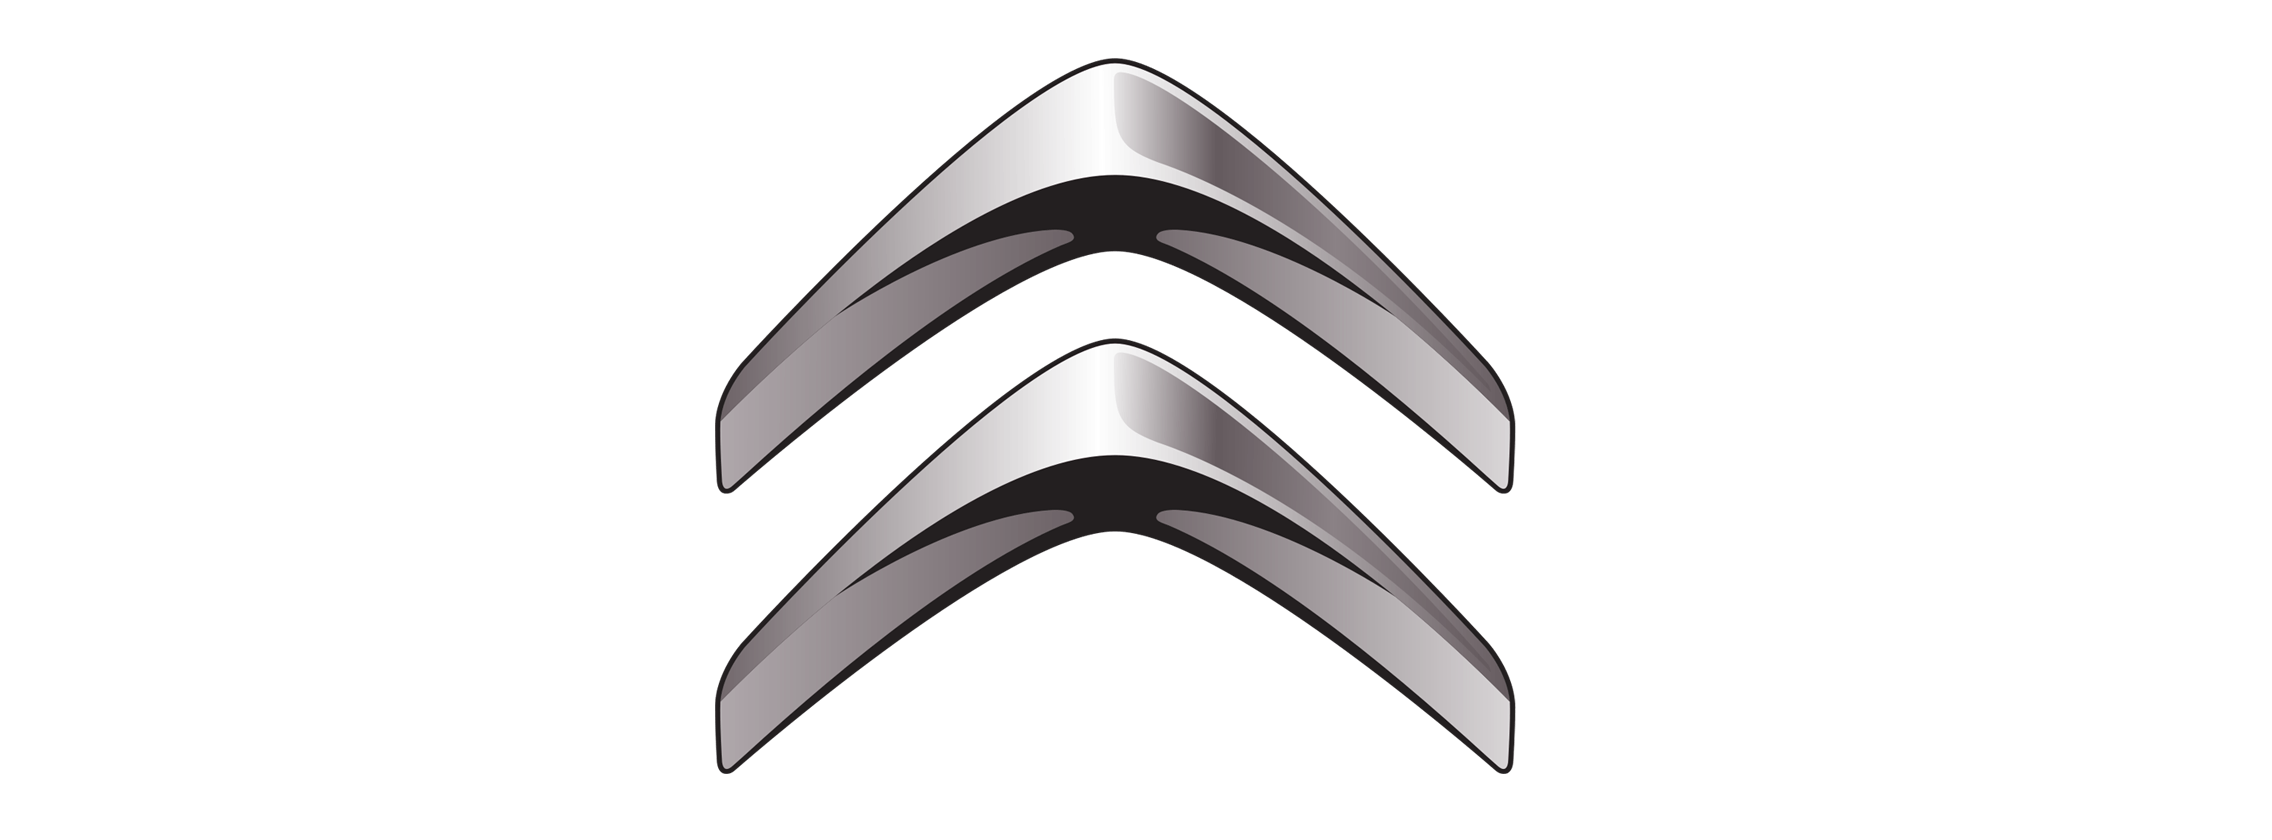 Citroen Logo - Citroën Logo Meaning and History, latest models | World Cars Brands